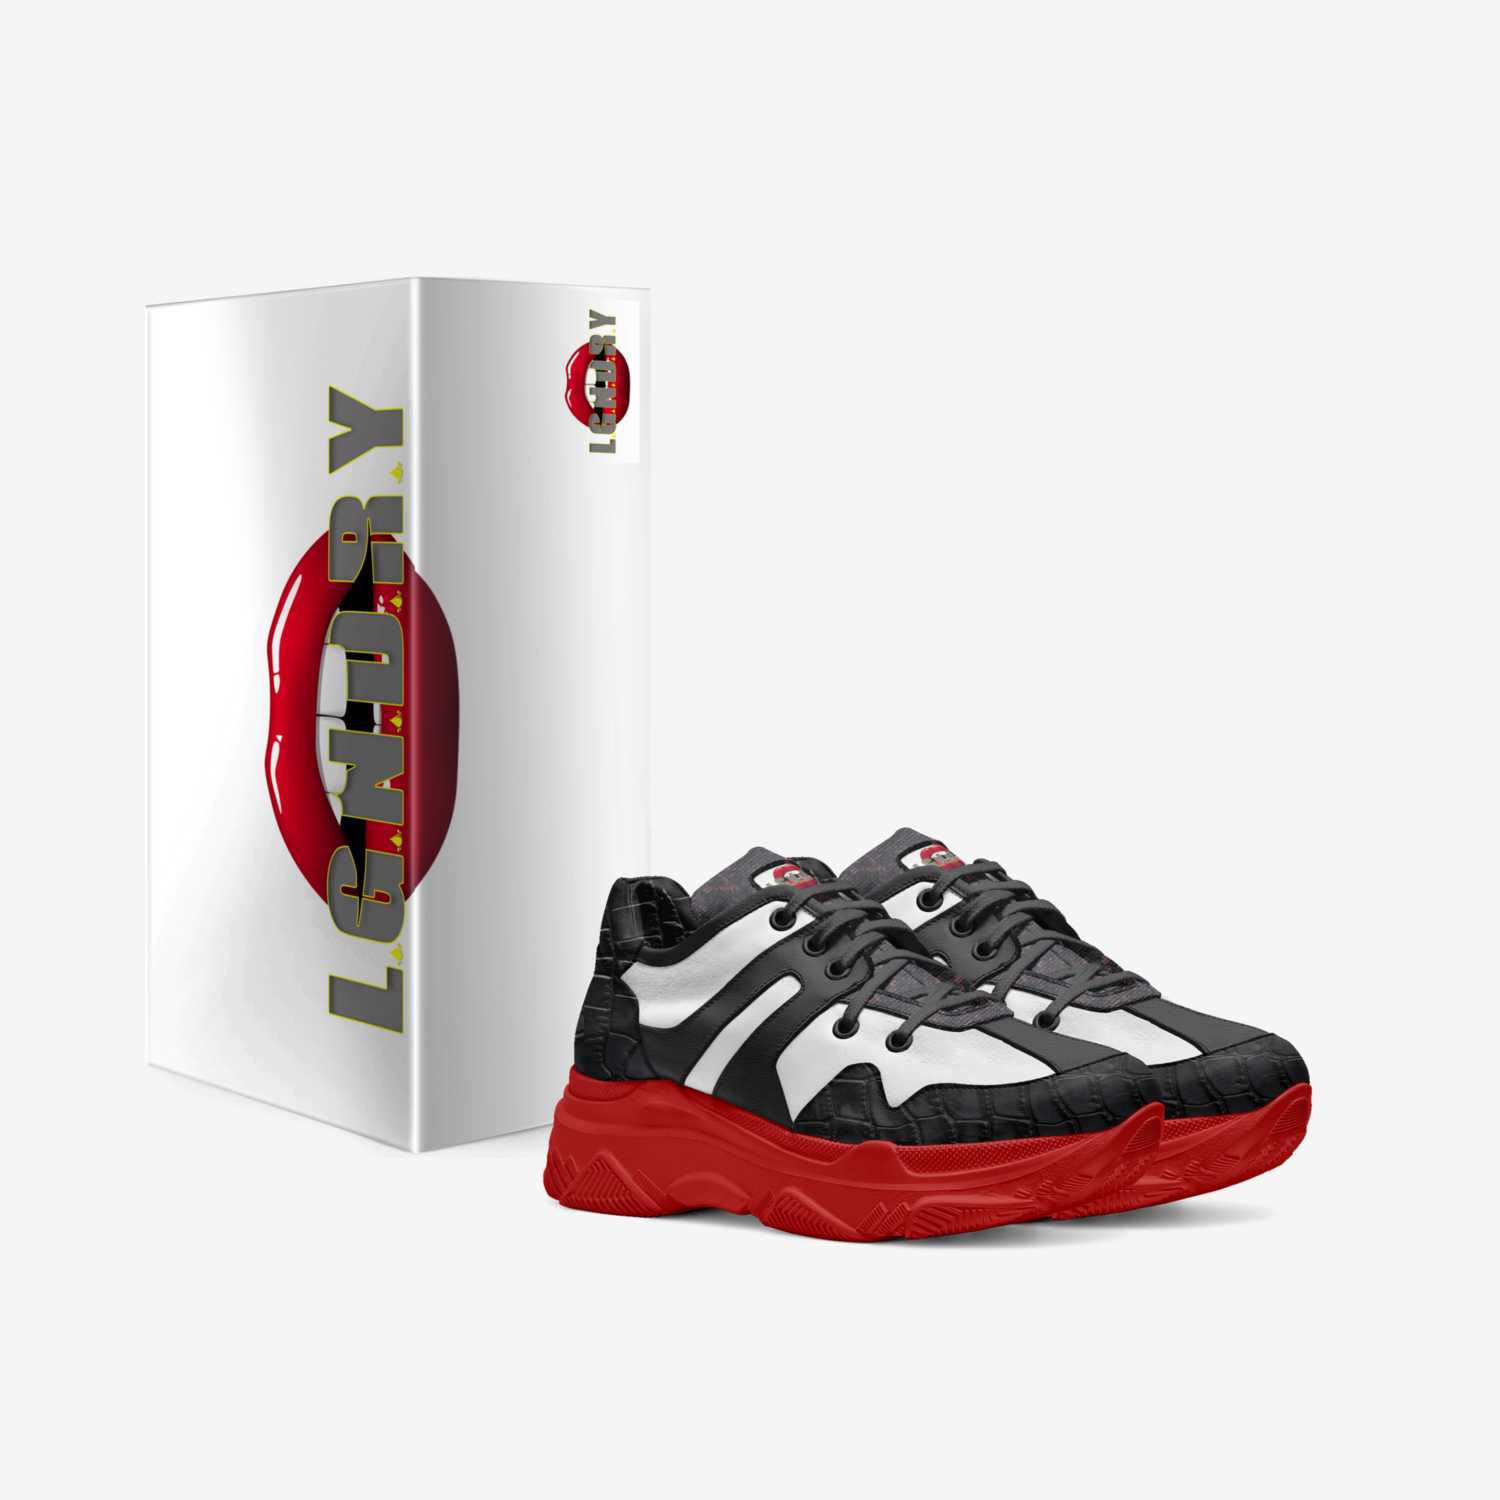 L.G.N. D. R. Y  custom made in Italy shoes by Carl O’brien | Box view